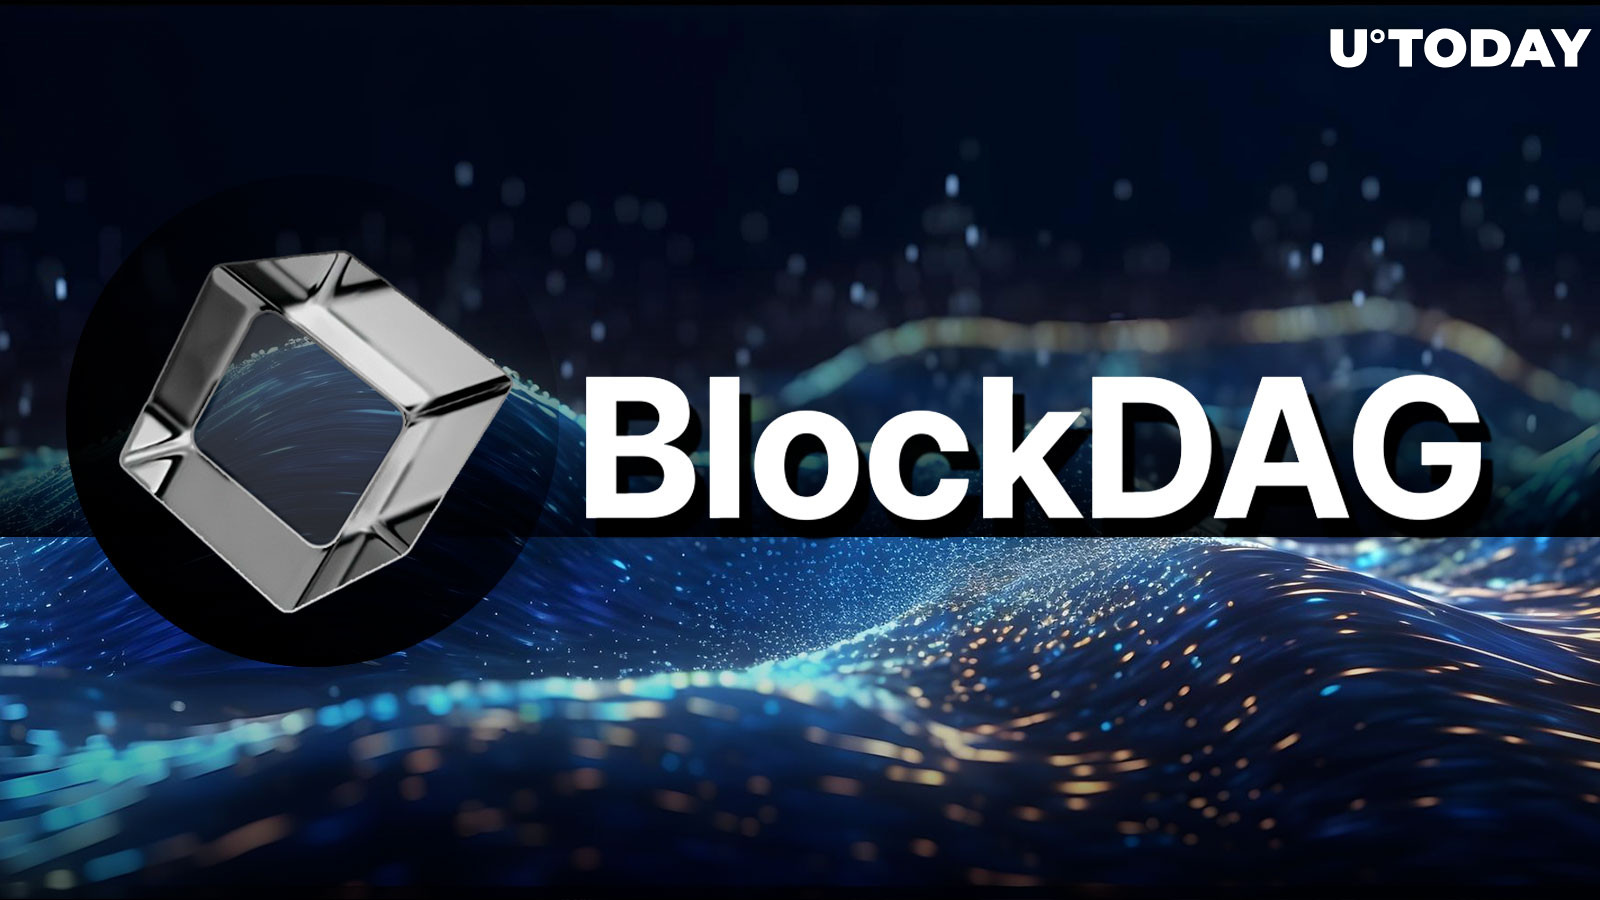 BlockDAG's Batch 4 Presale Revealed, Uniswap Trading Volume Fluctuates